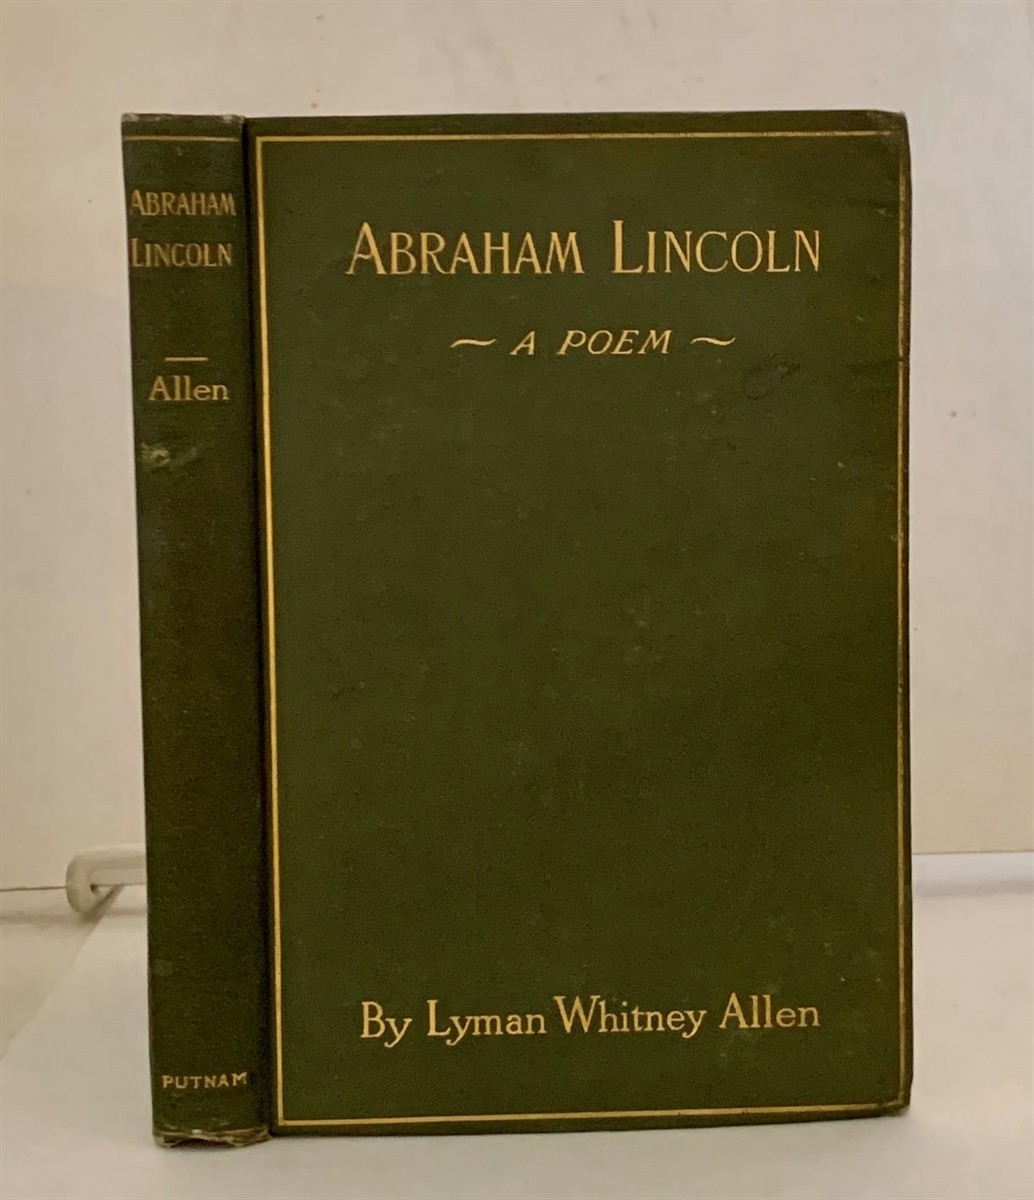 ALLEN, LYMAN WHITNEY - Abraham Lincoln a Poem